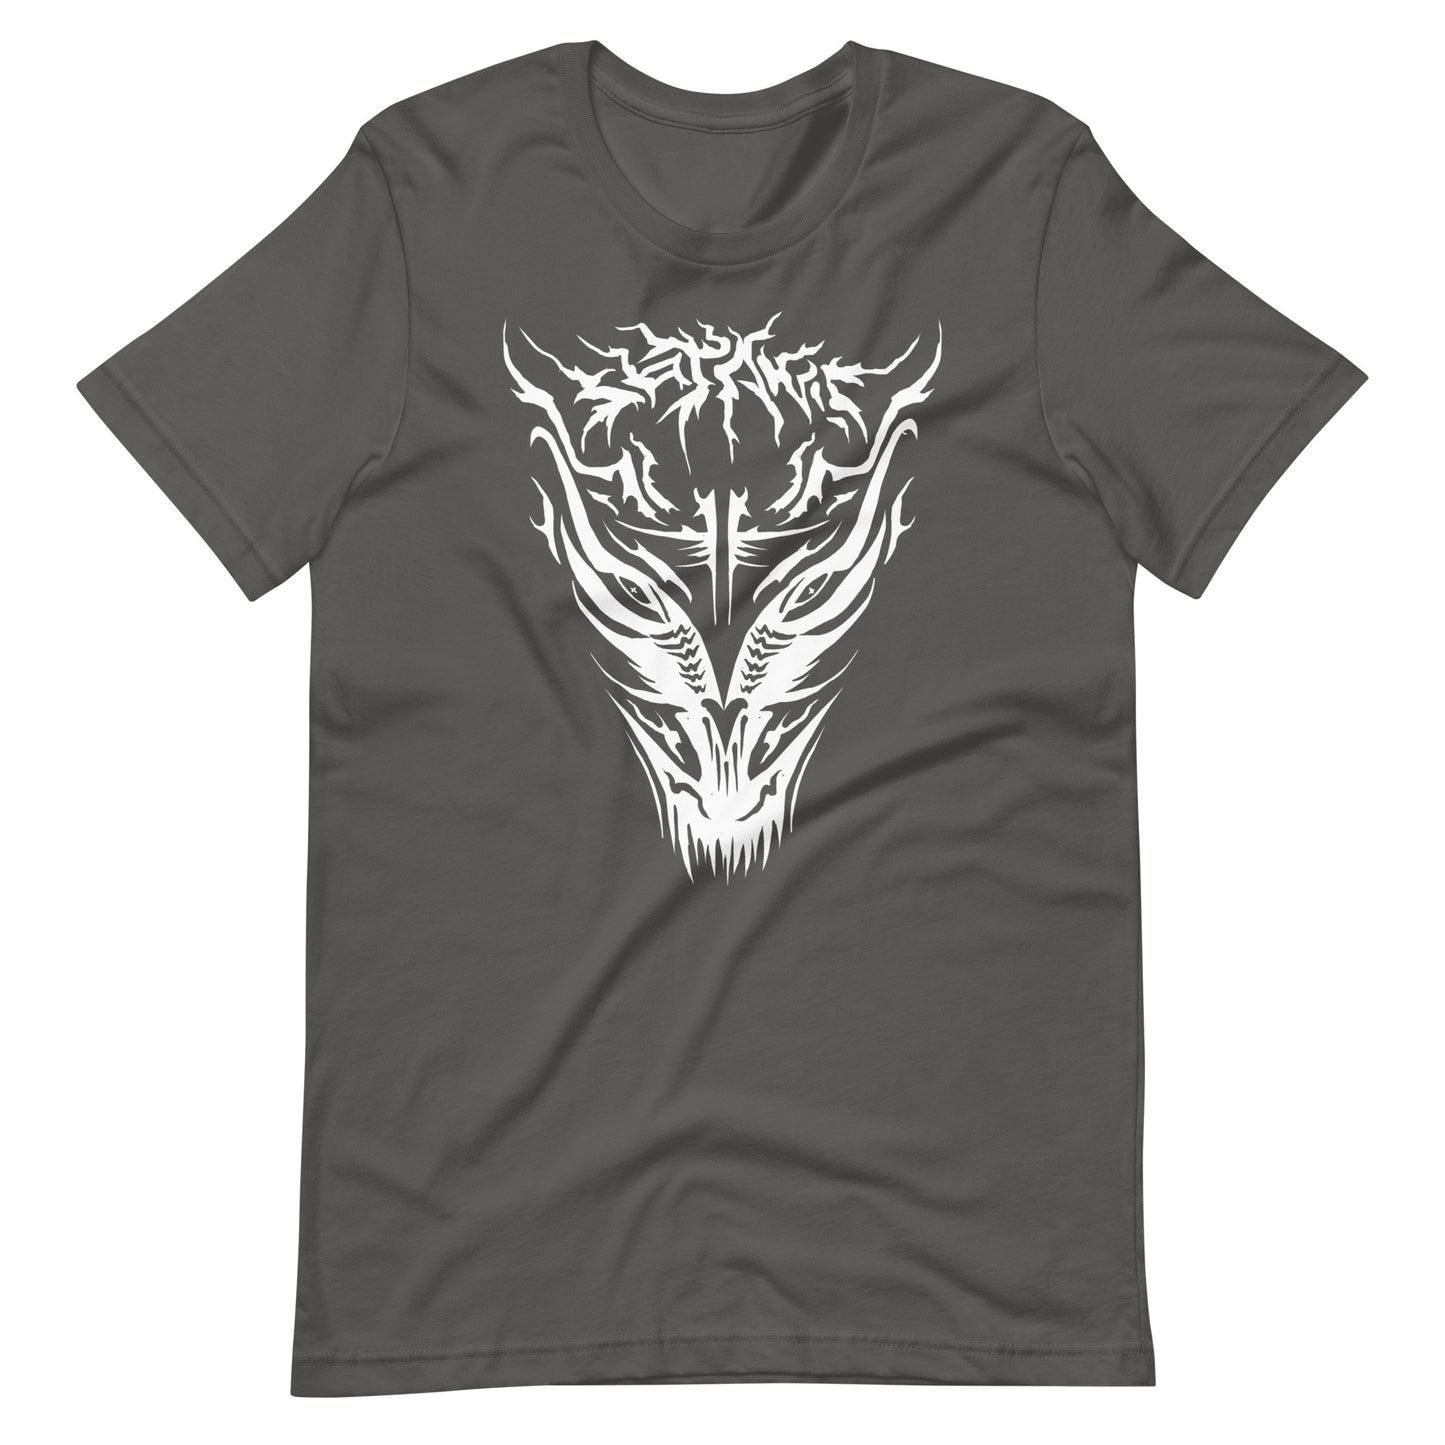 Demon - Men's t-shirt - Asphalt Front